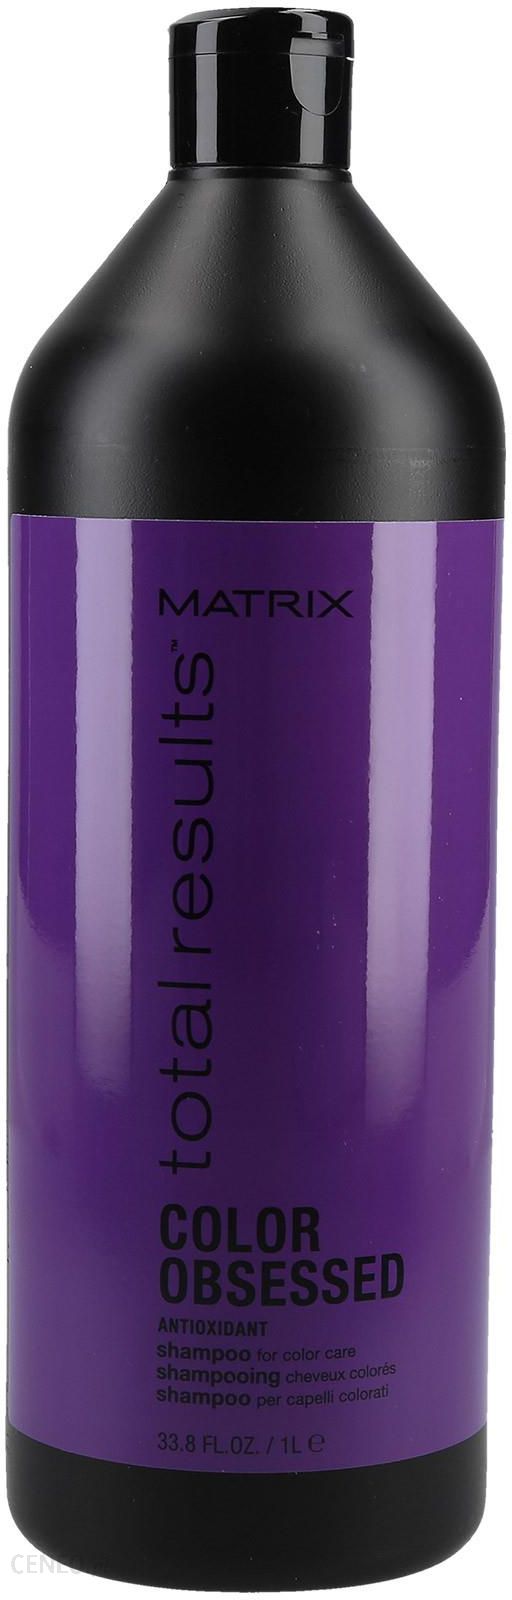 szampon matrix ydro 1000 ml ceneo